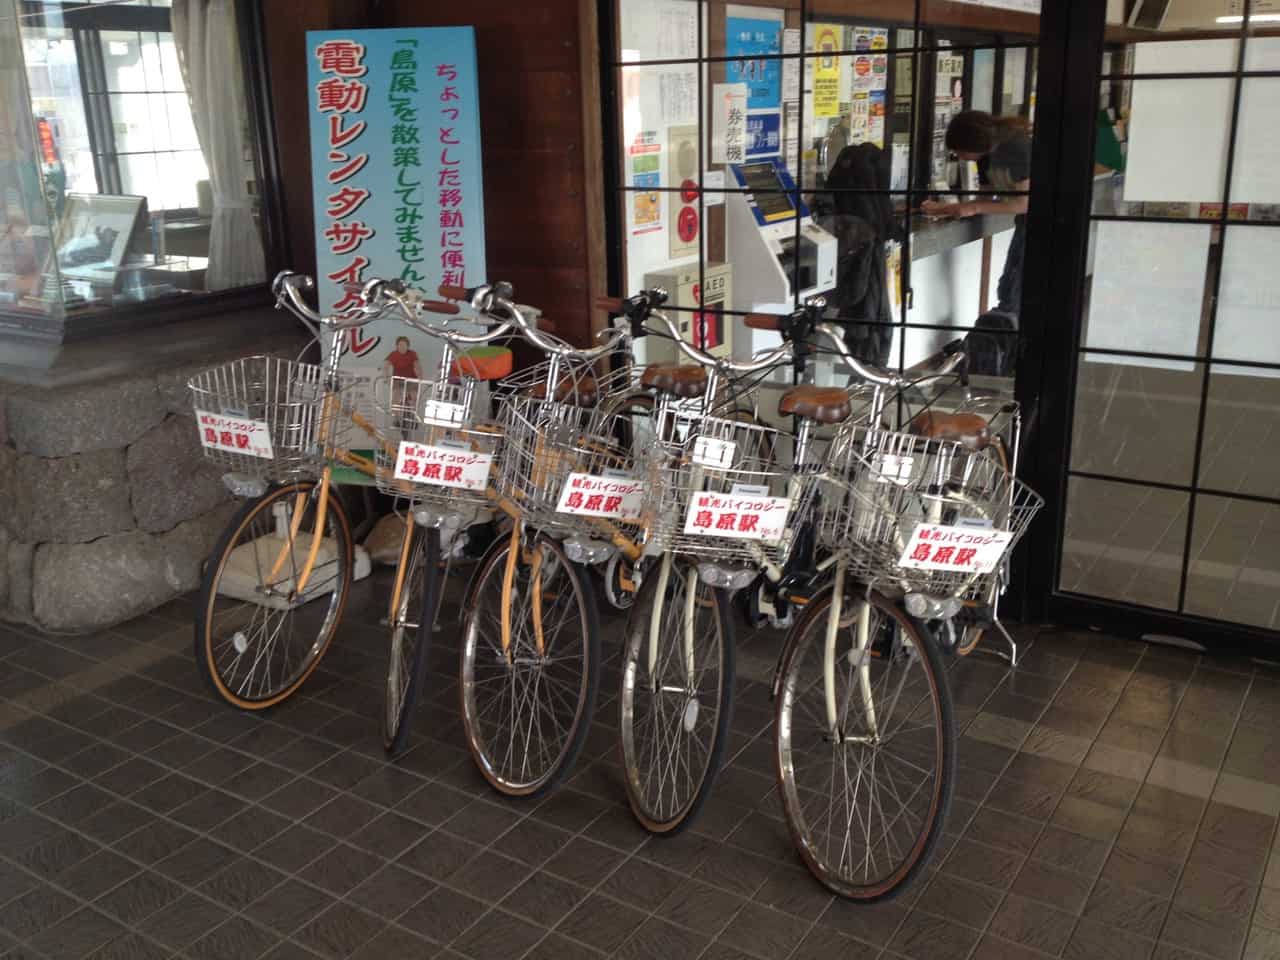 Explore Shimabara by Bicycle Rental!